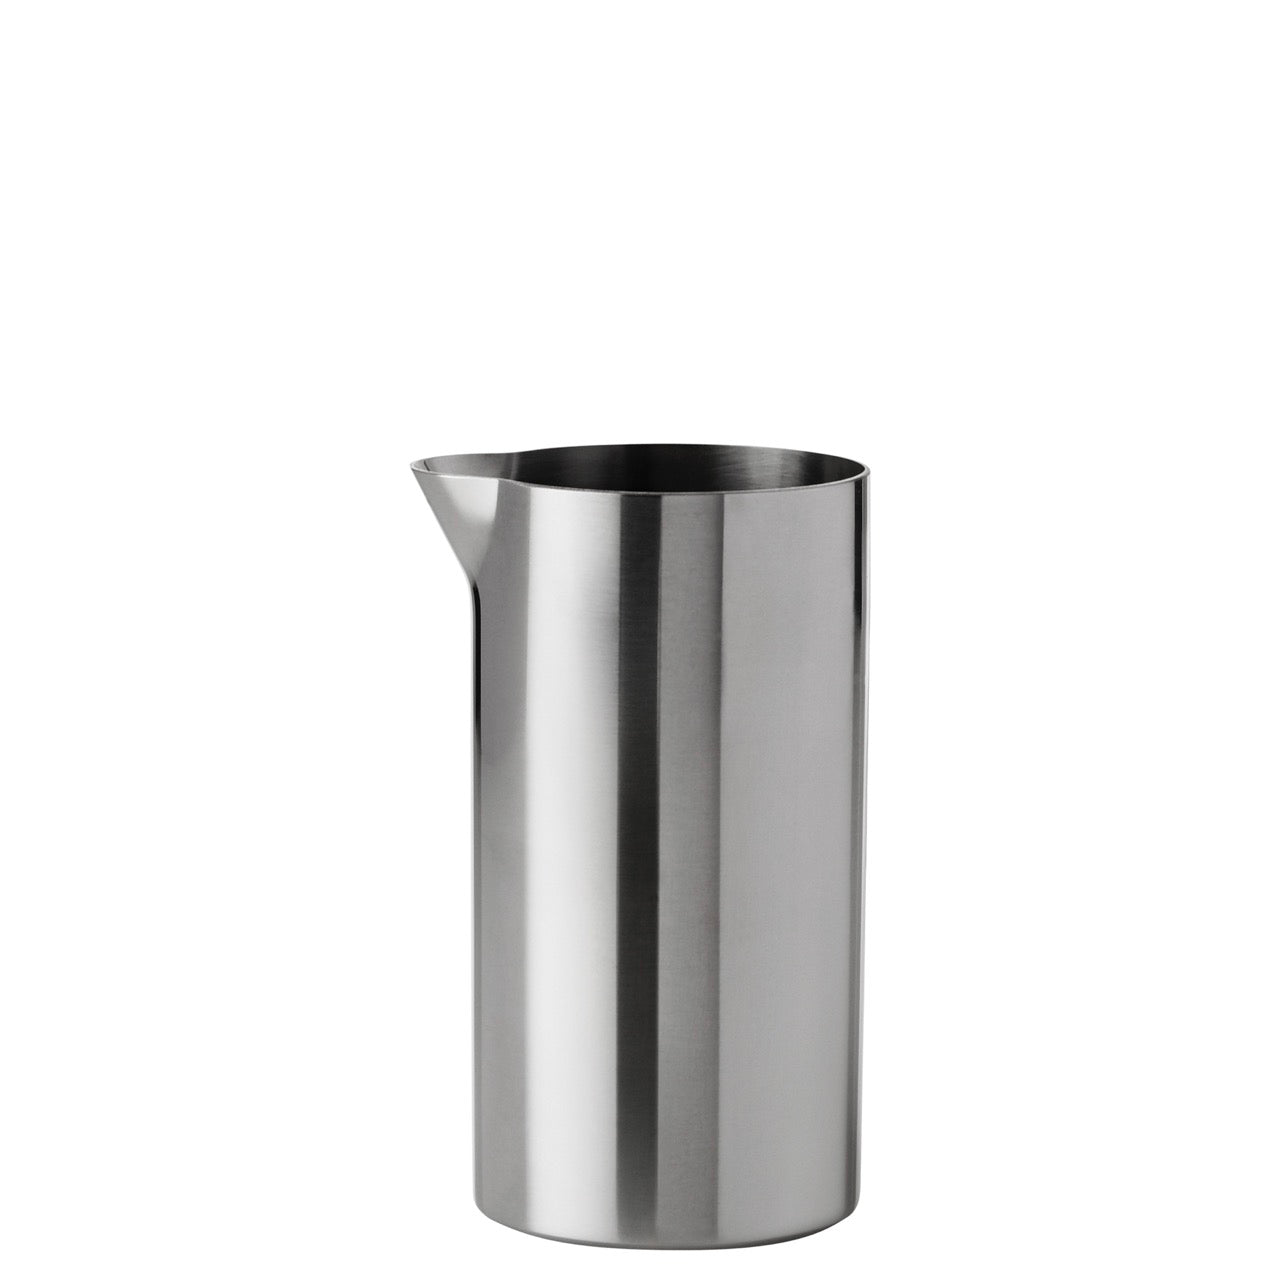 Arne Jacobsen Creamer and Sugar Bowl Set by Arne Jacobsen | Luxury Serveware | Willow & Albert Home